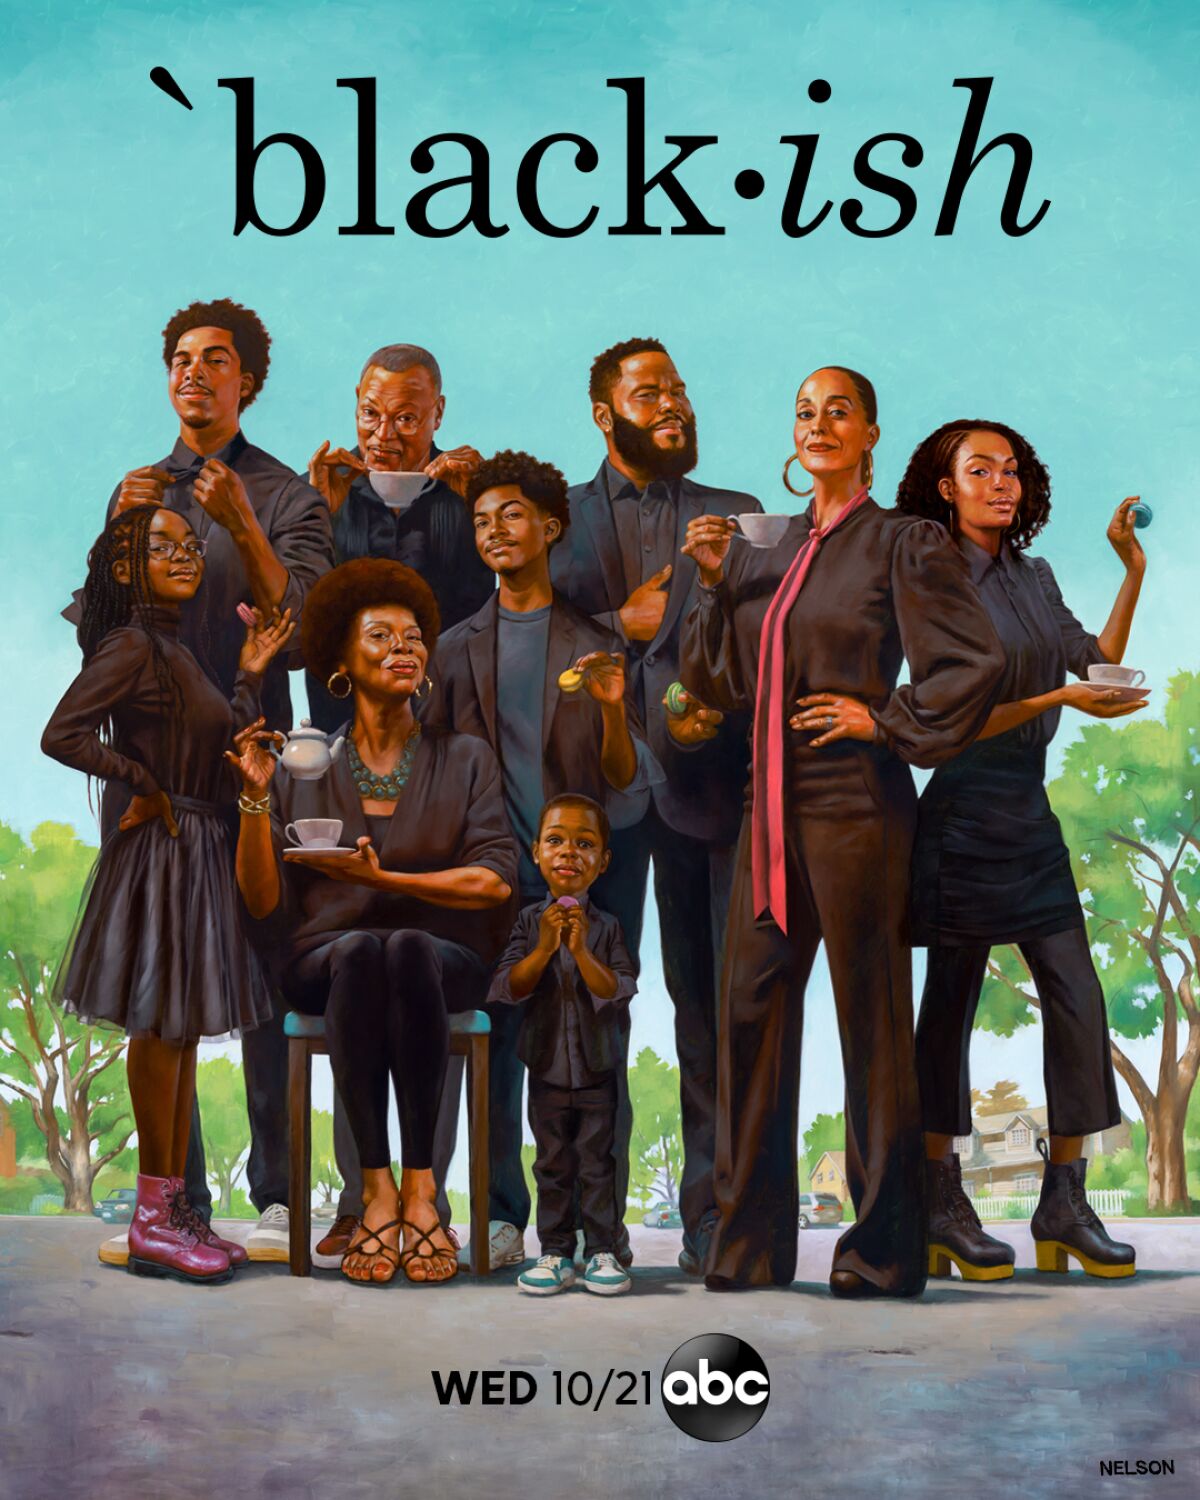 The key art for Season 7 of "black-ish," featuring Kadir Nelson's painting "Black-ish Tea."